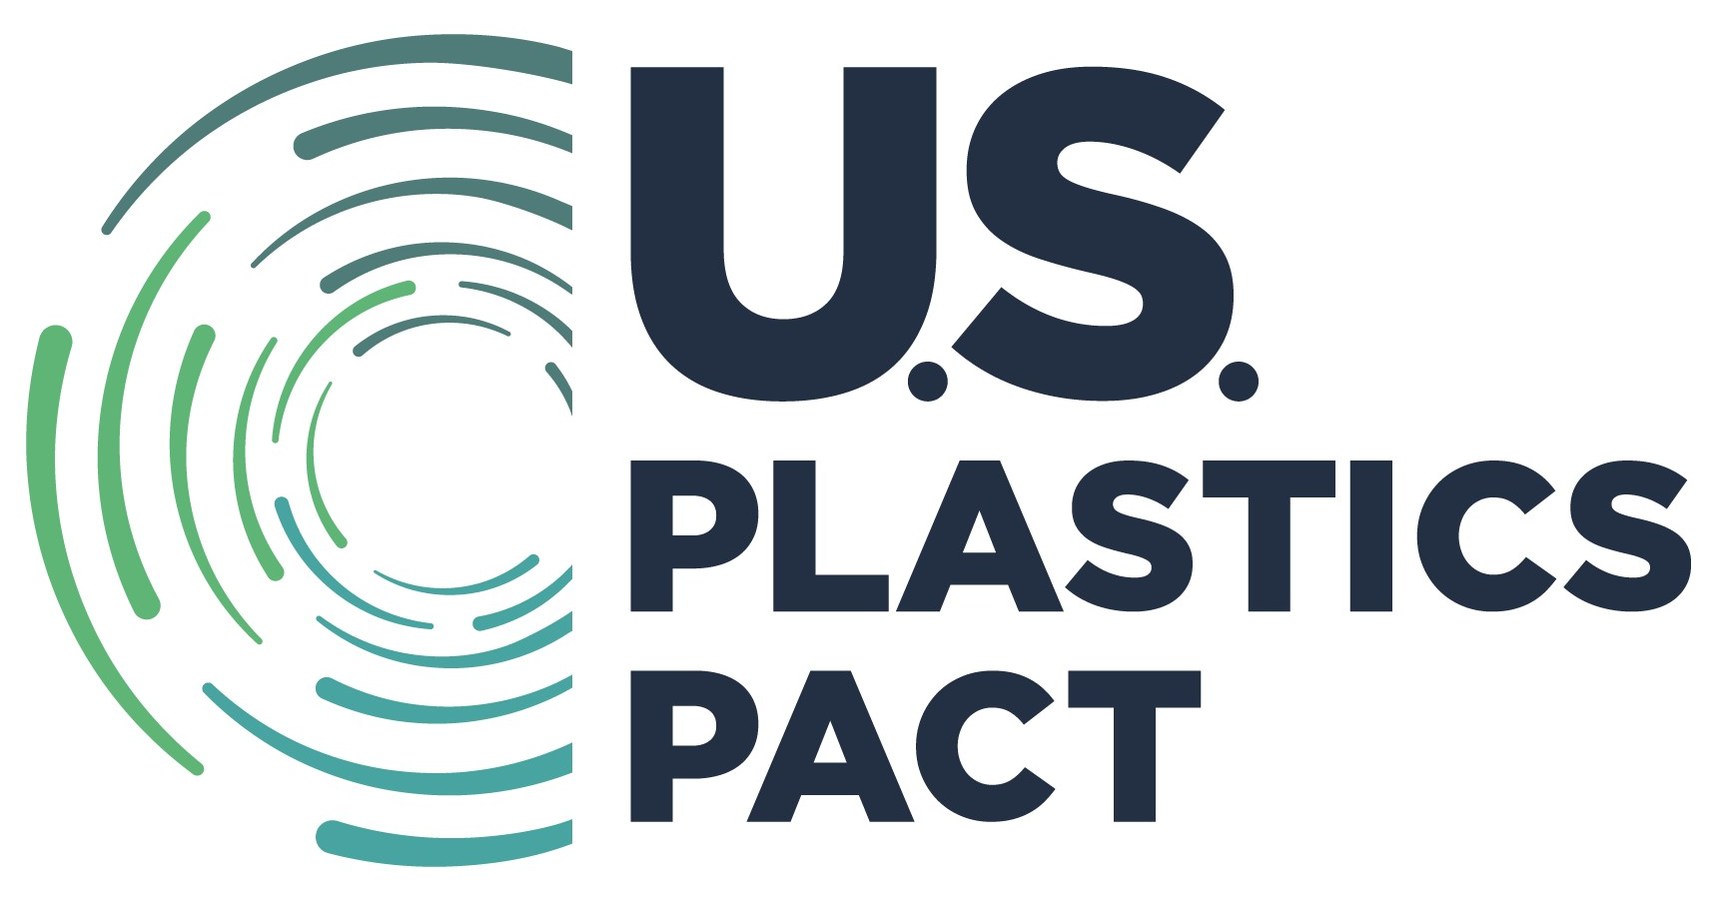 US Plastics Pact Launches to Ignite Change Toward Circular Economy for Plastic - PRNewswire